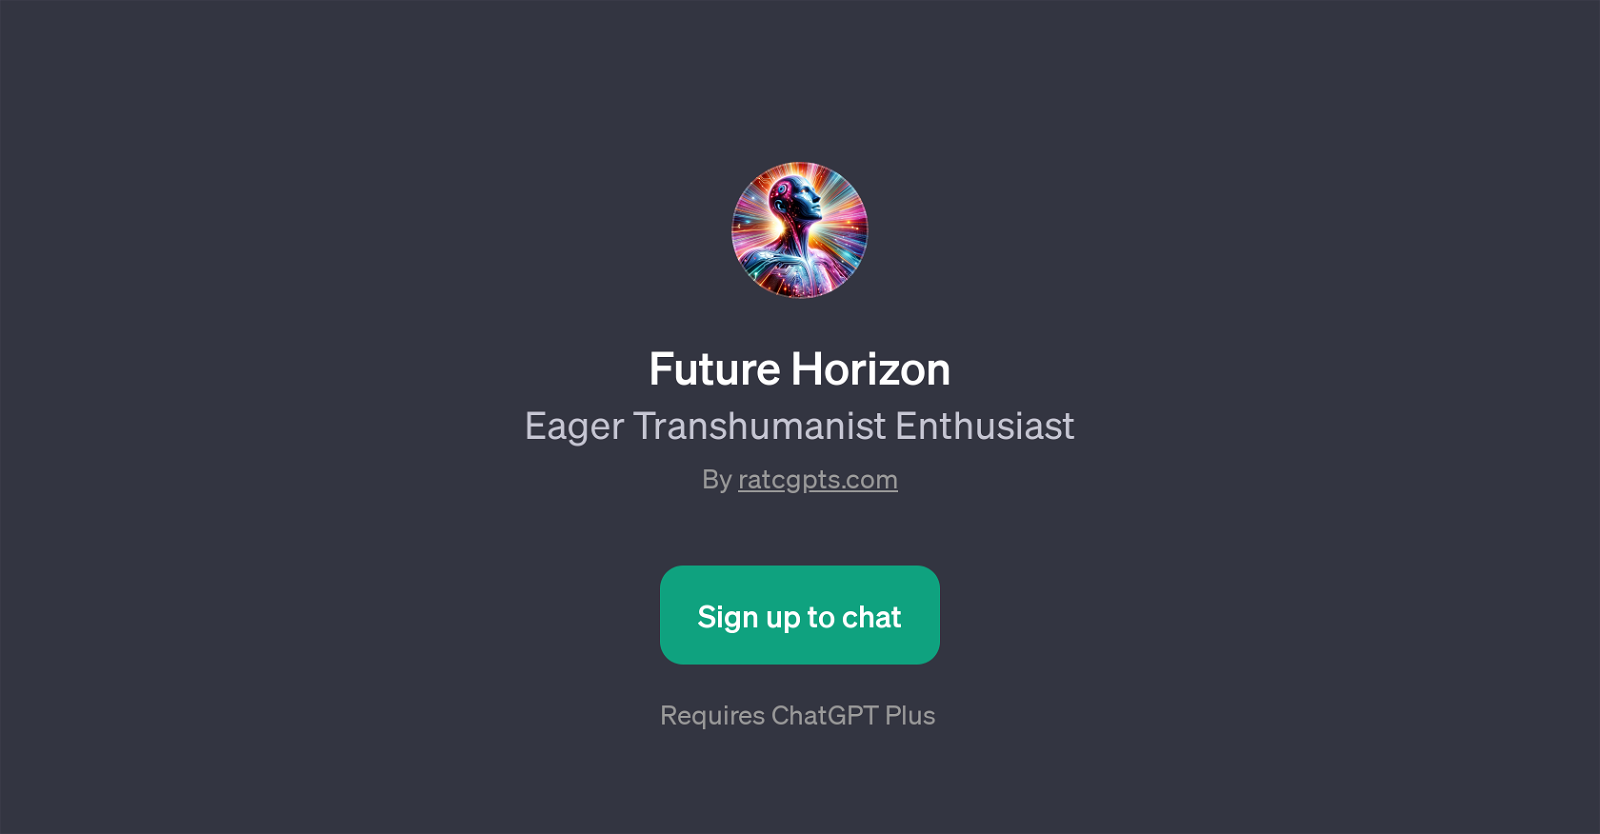 Future Horizon website